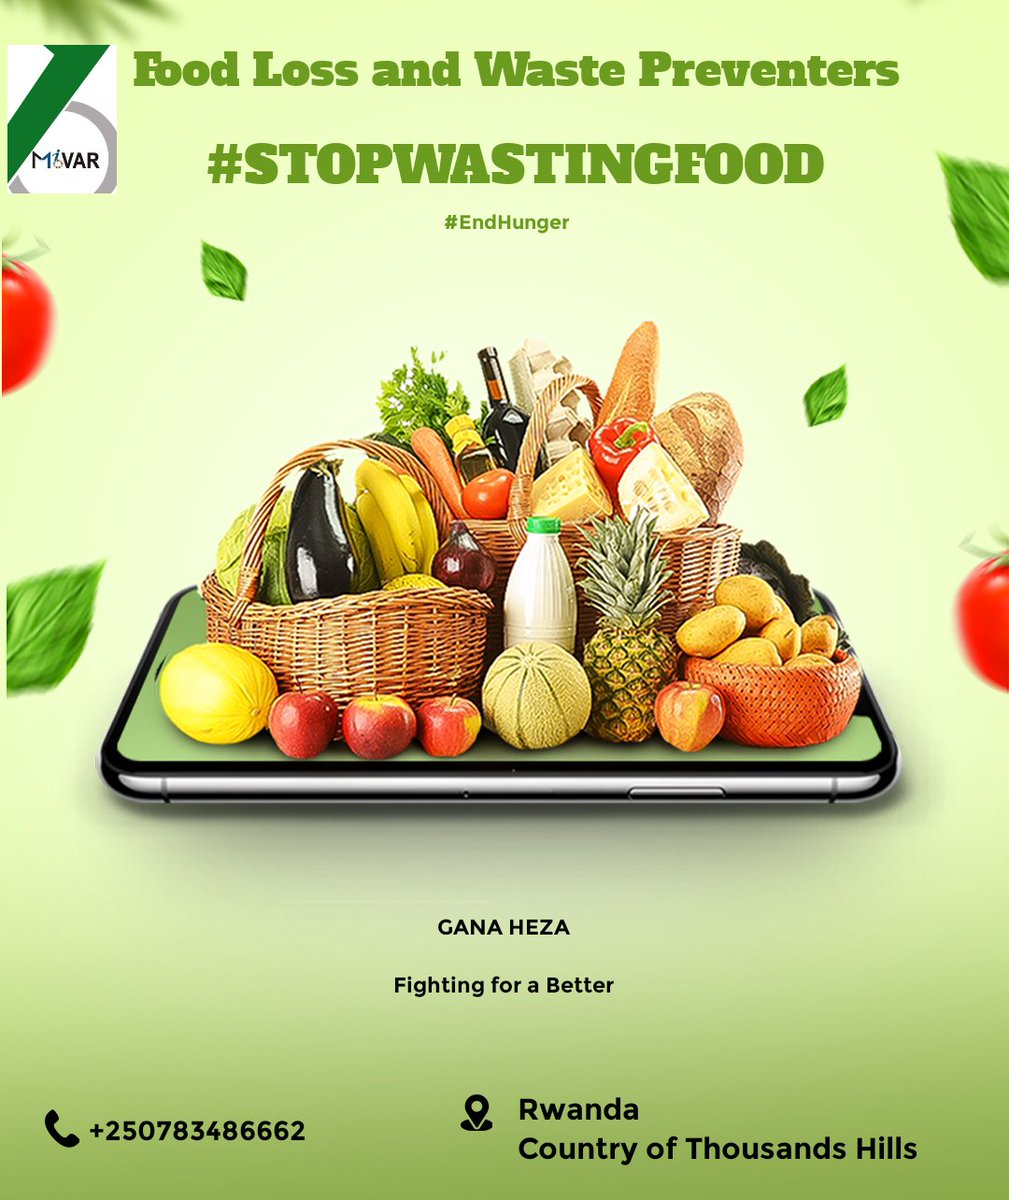 Do not waste!!!

#StopWastingFood 
#GANAHEZA